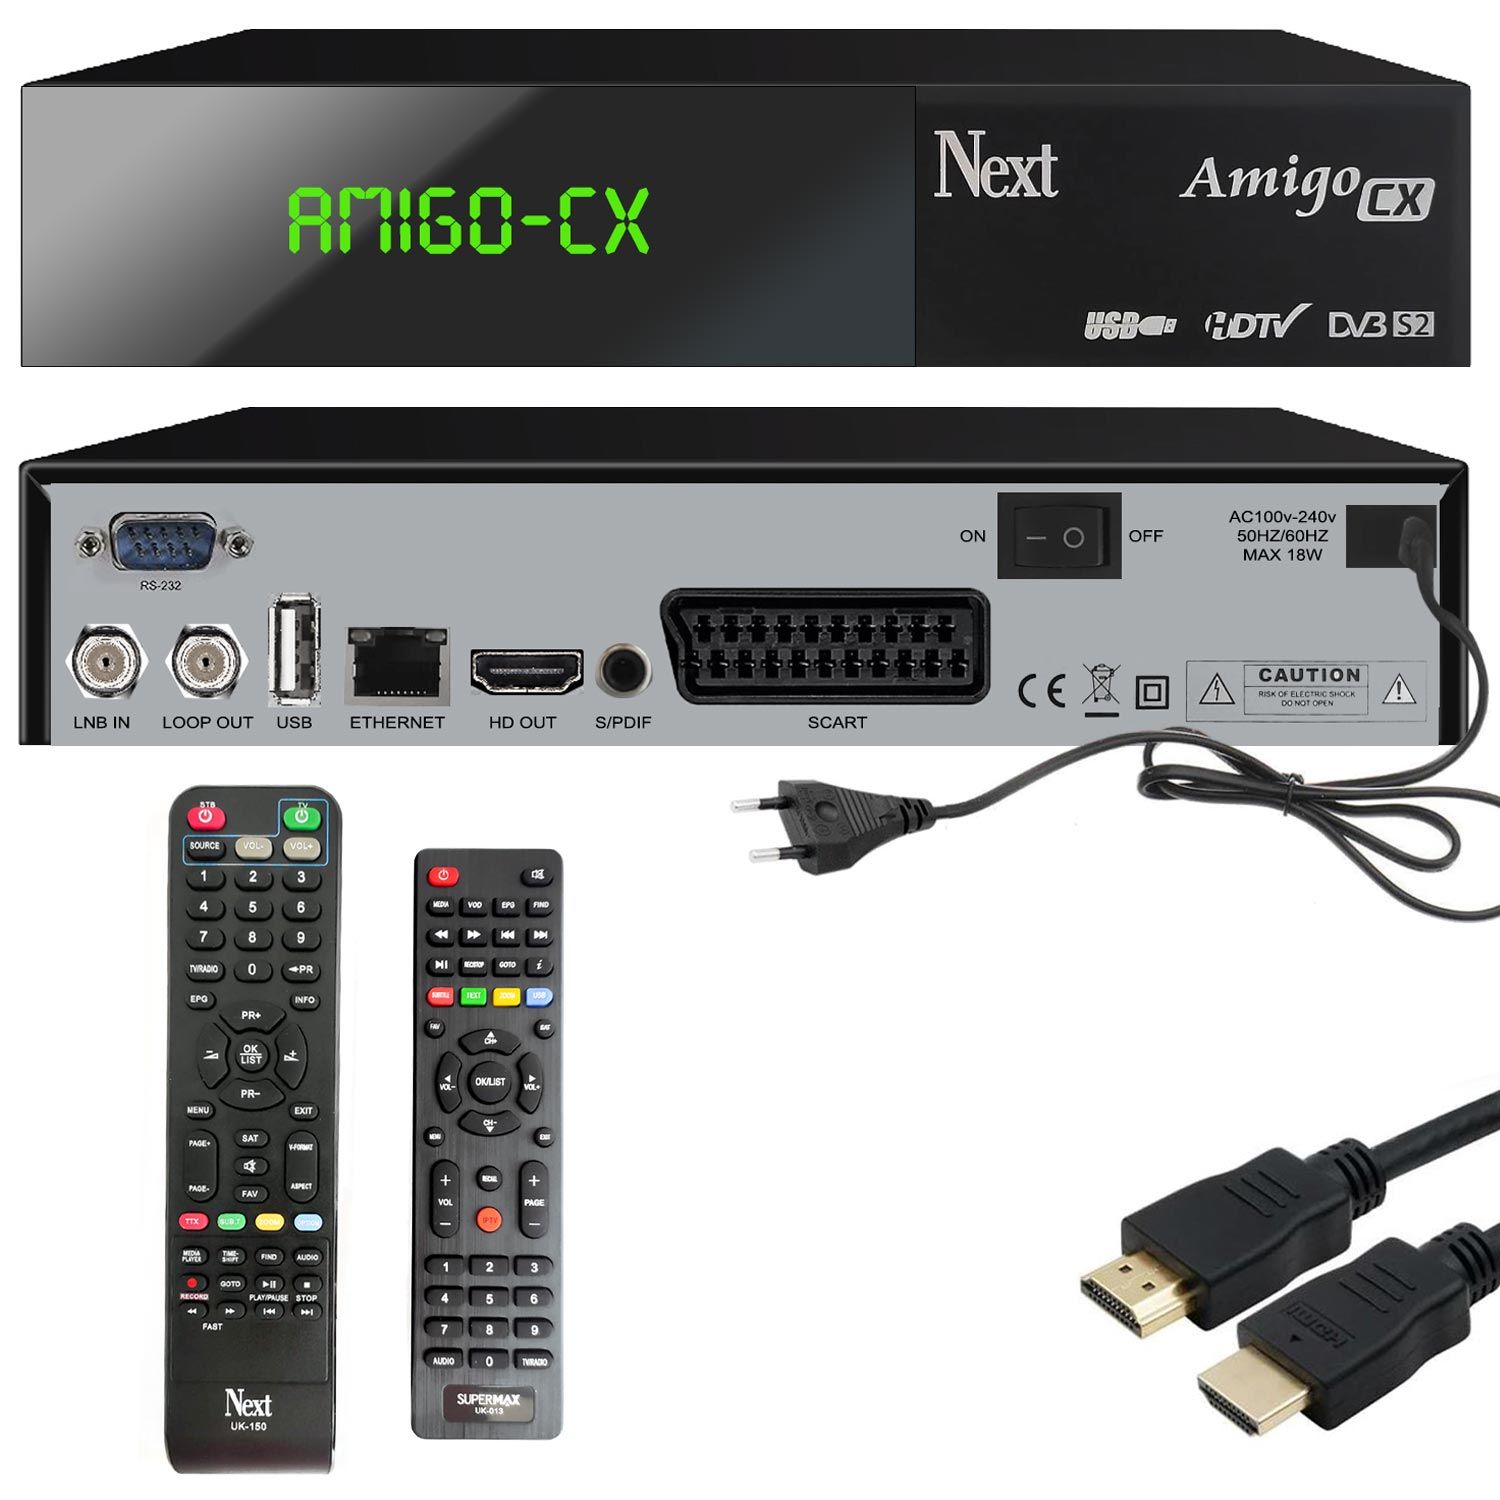 UYDU ALICI KASALI FULL HD SCART+HDMI WIFI YOUTUBE ETHERNET IPTV NEXT AMİGO CX